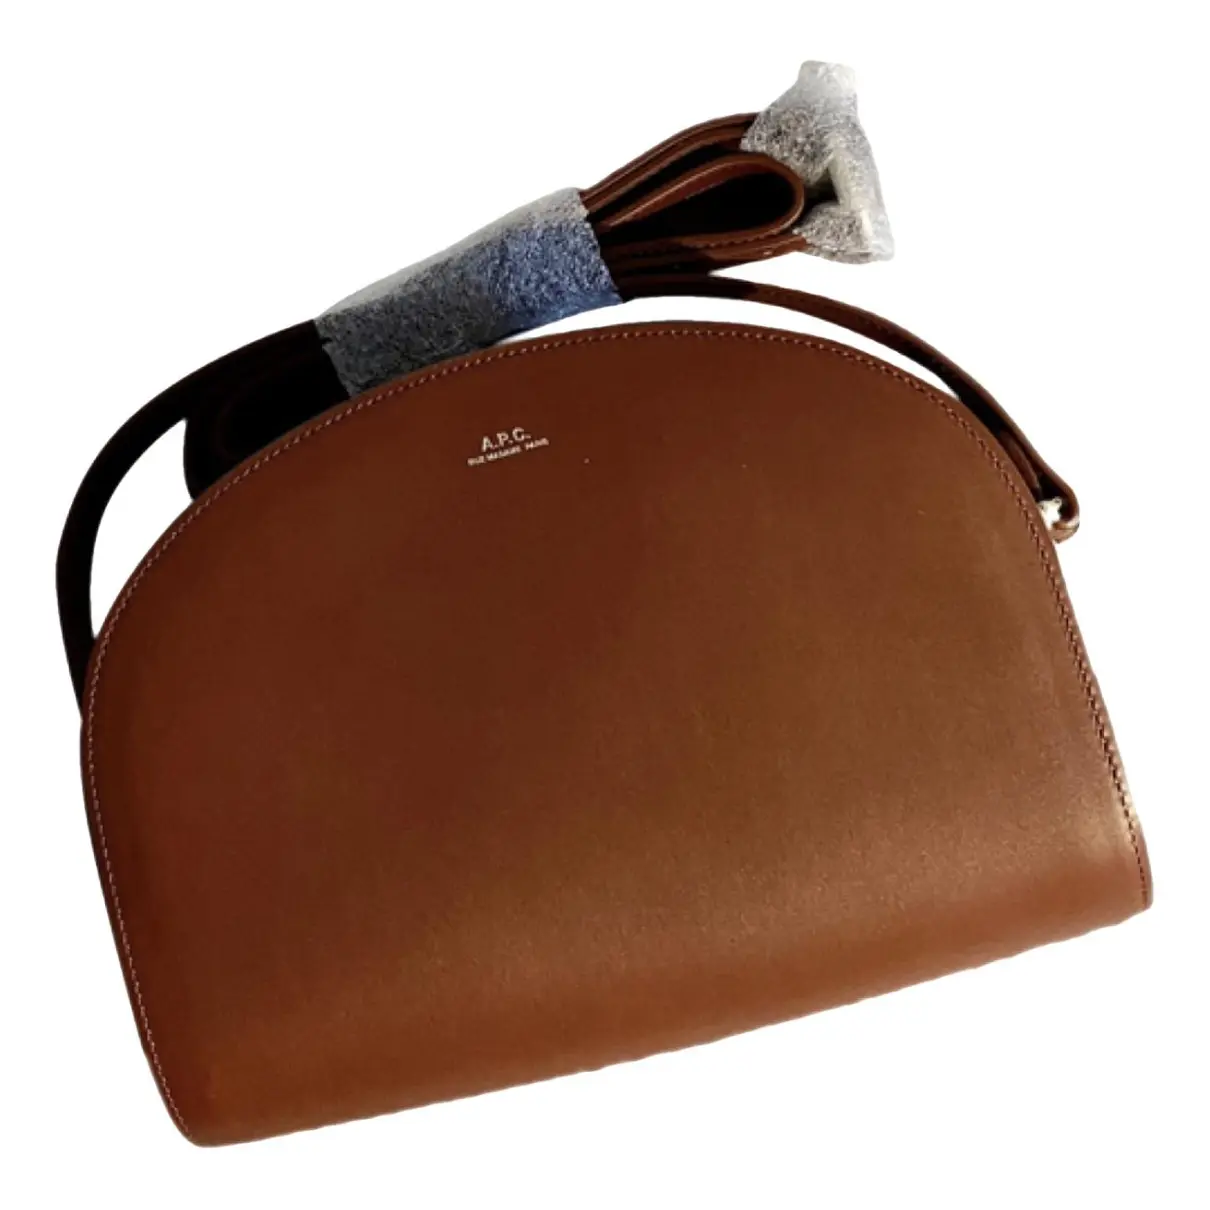 Demi-lune leather handbag APC